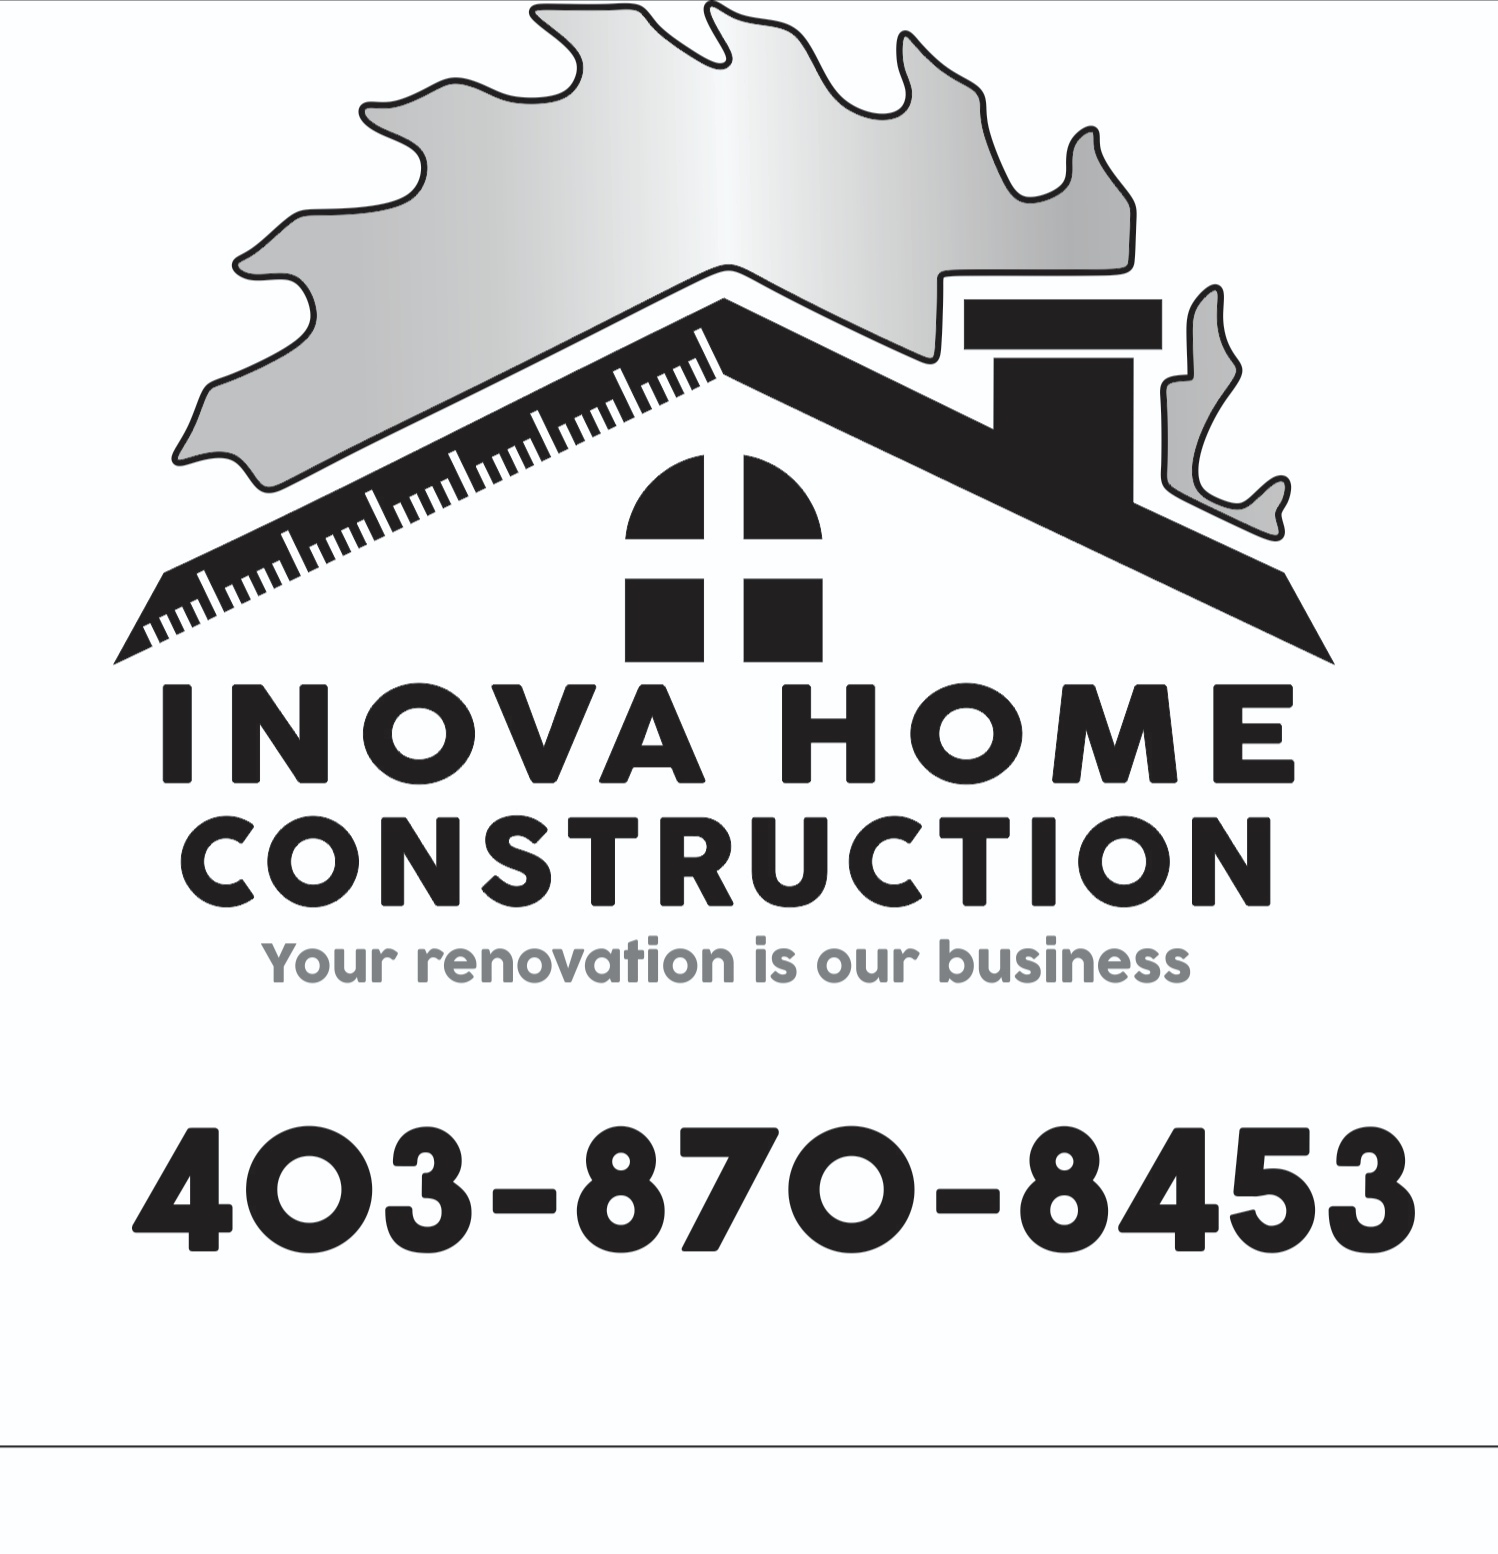 Inova Home Construction's logo